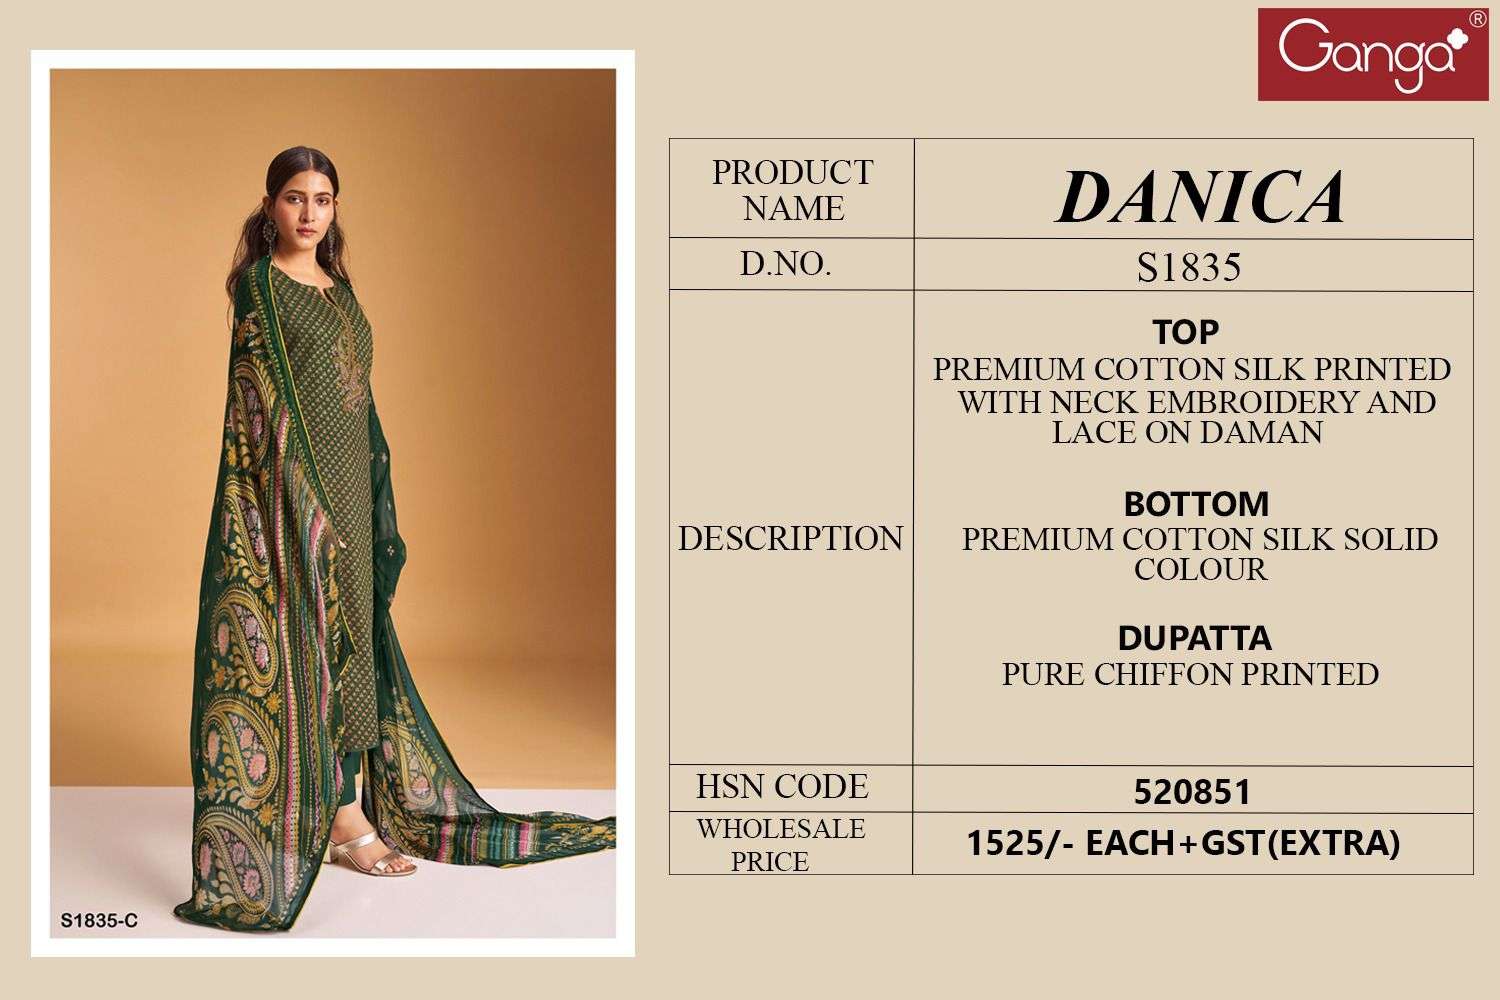 ganga danica 1835 series premium cotton silk top bottom with dupatta latest catalogue wholesale surat